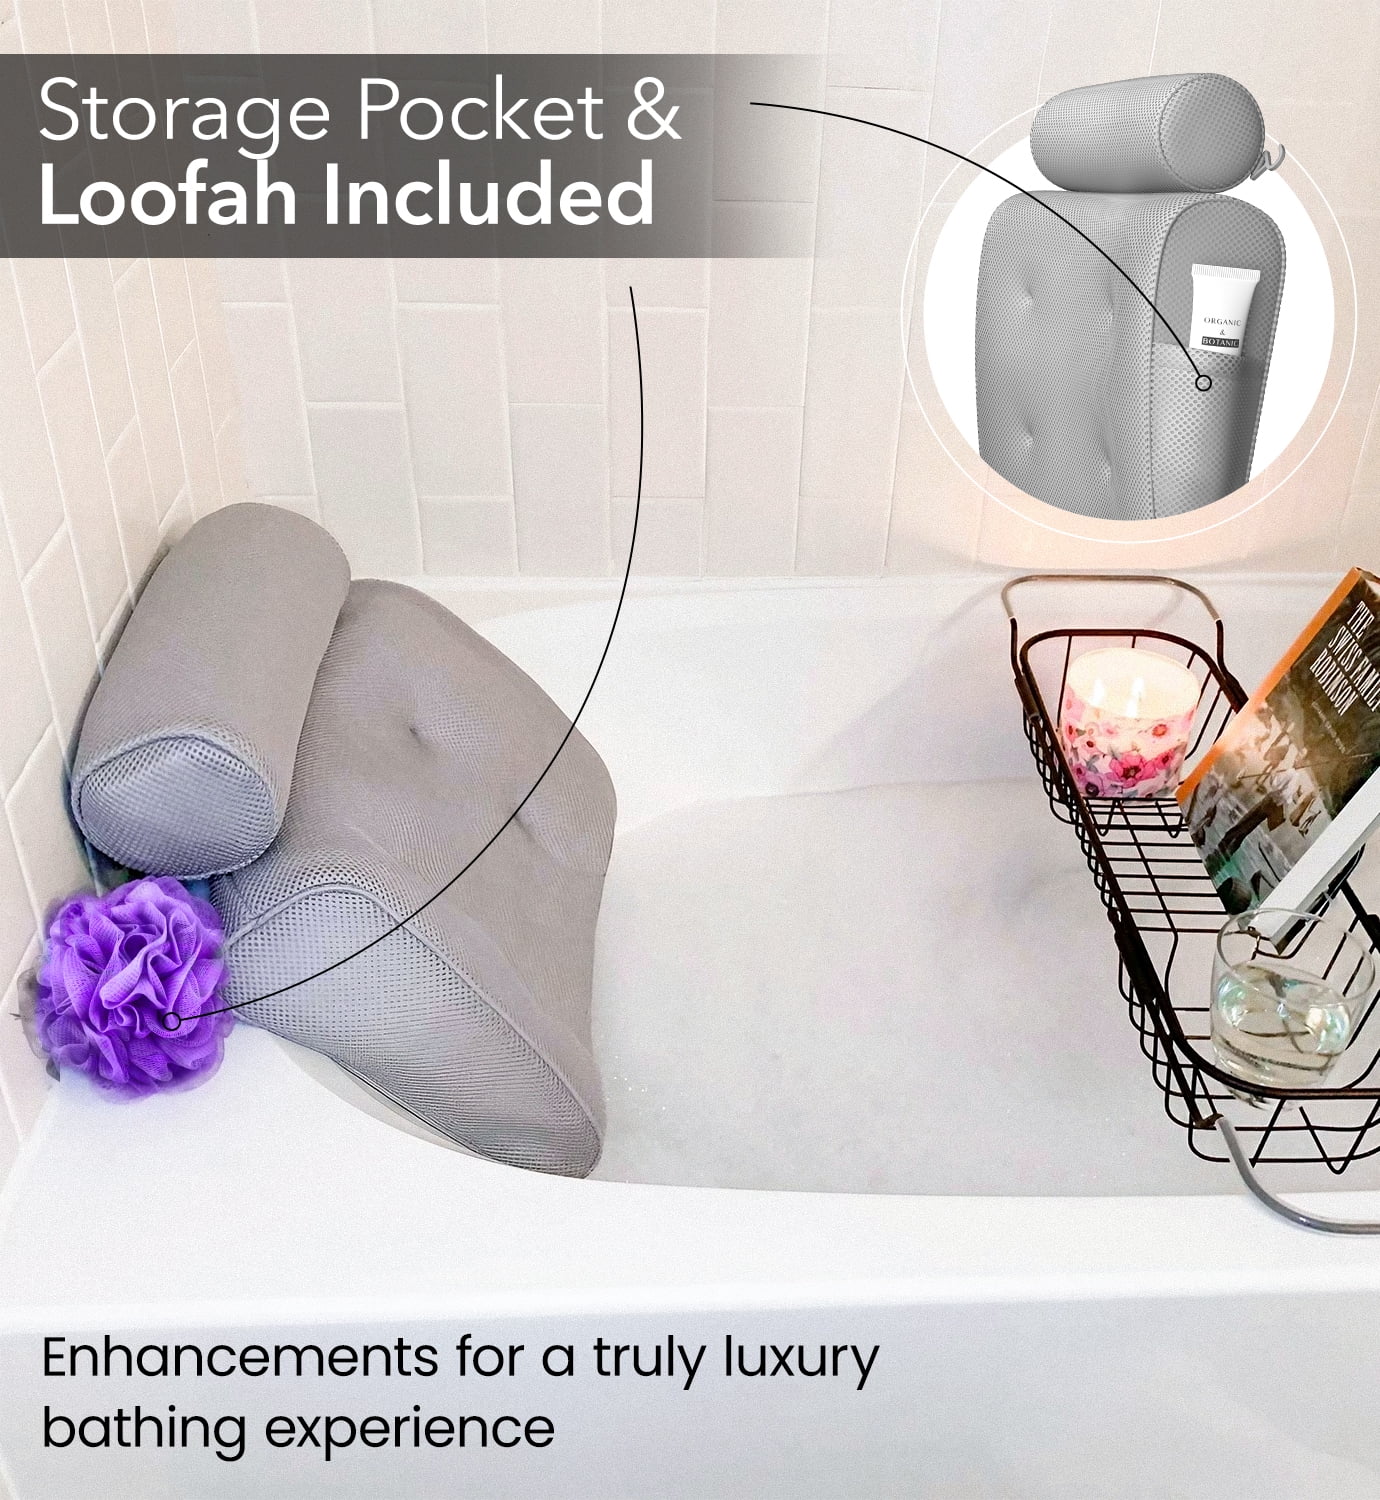 Everlasting Comfort Luxury Bath Pillow - Head, Neck, Back Support